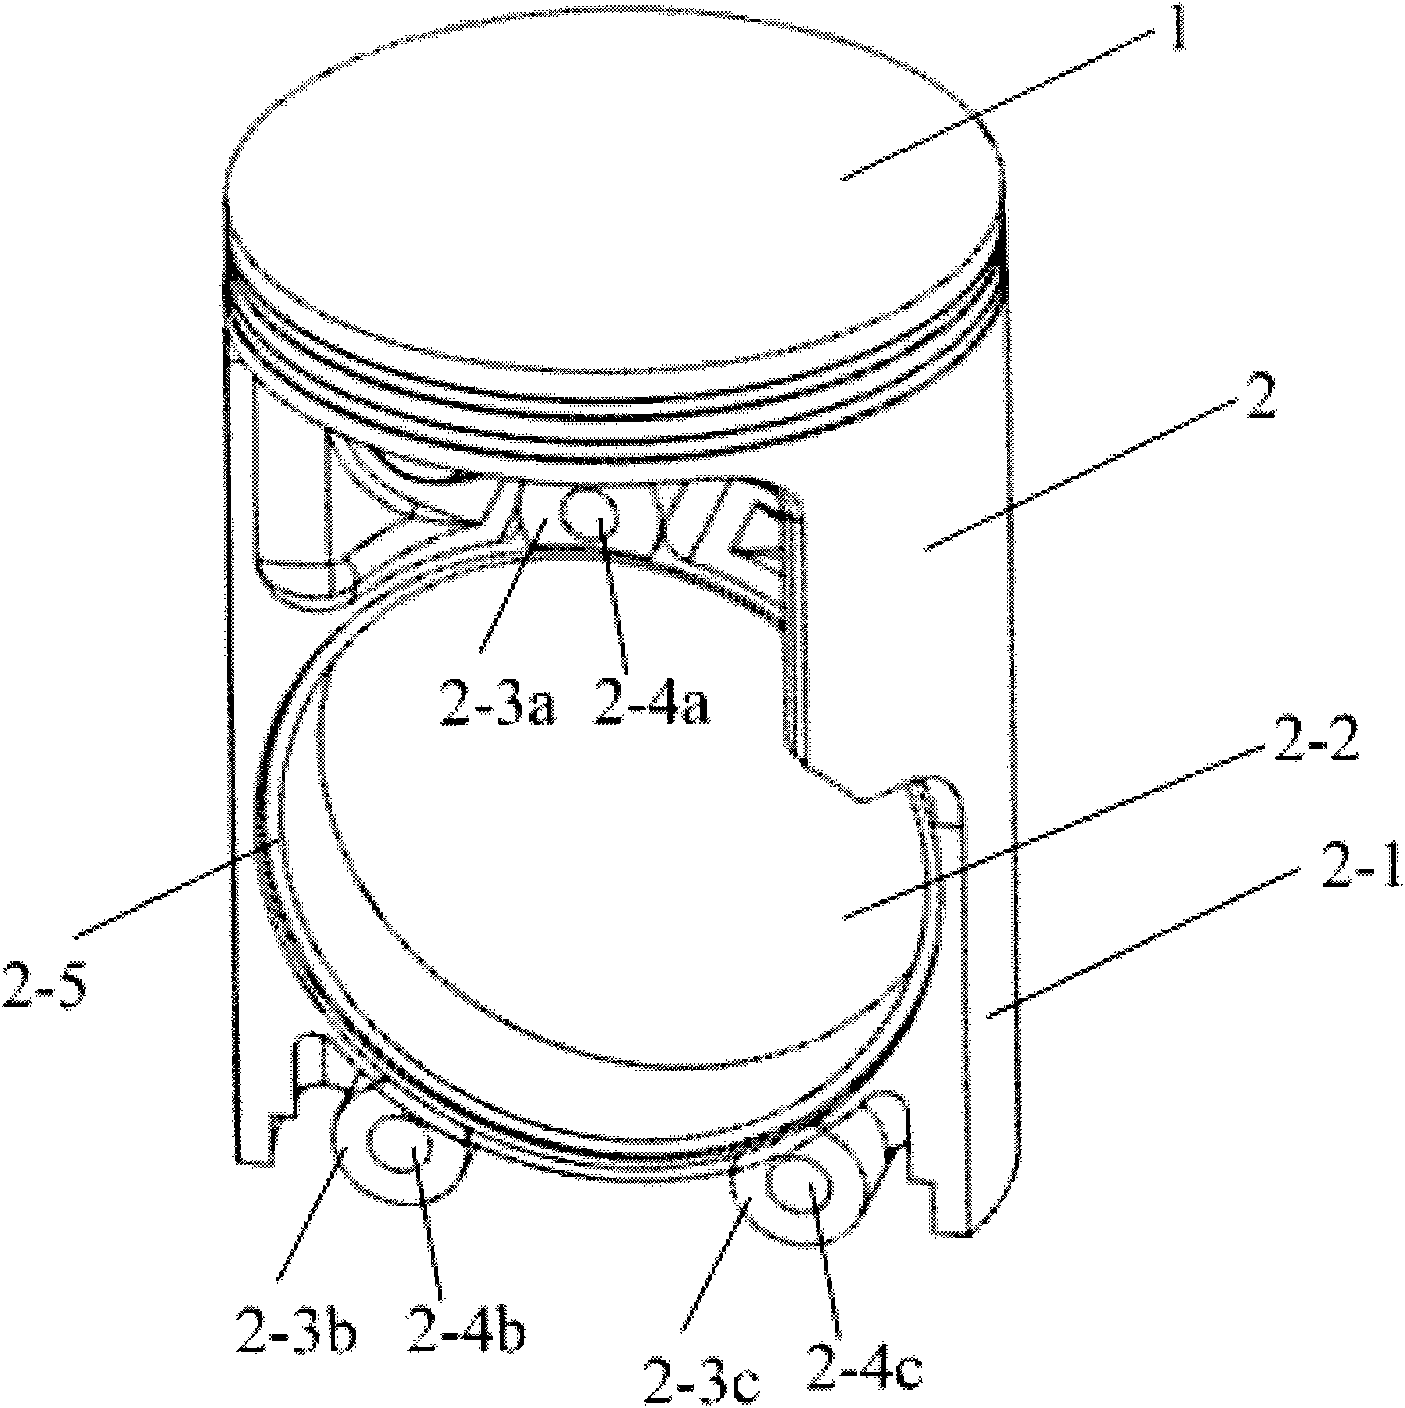 Piston, internal combustion engine and compressor of circular slider-crank mechanism of single cylinder engine